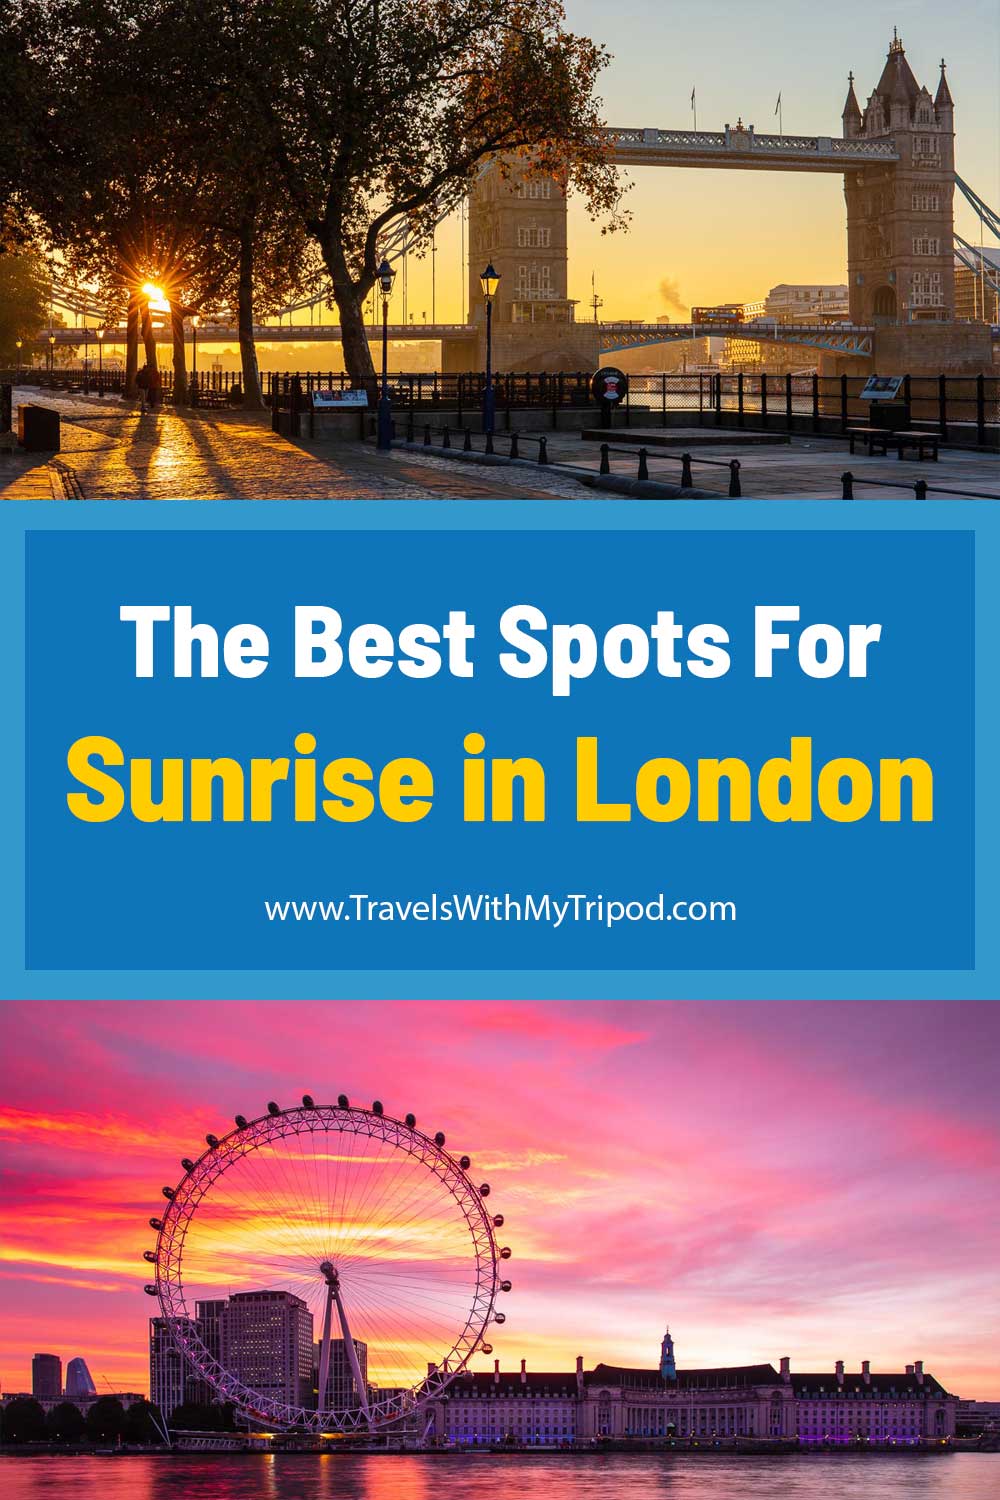 The Best Spots For Sunrise in London